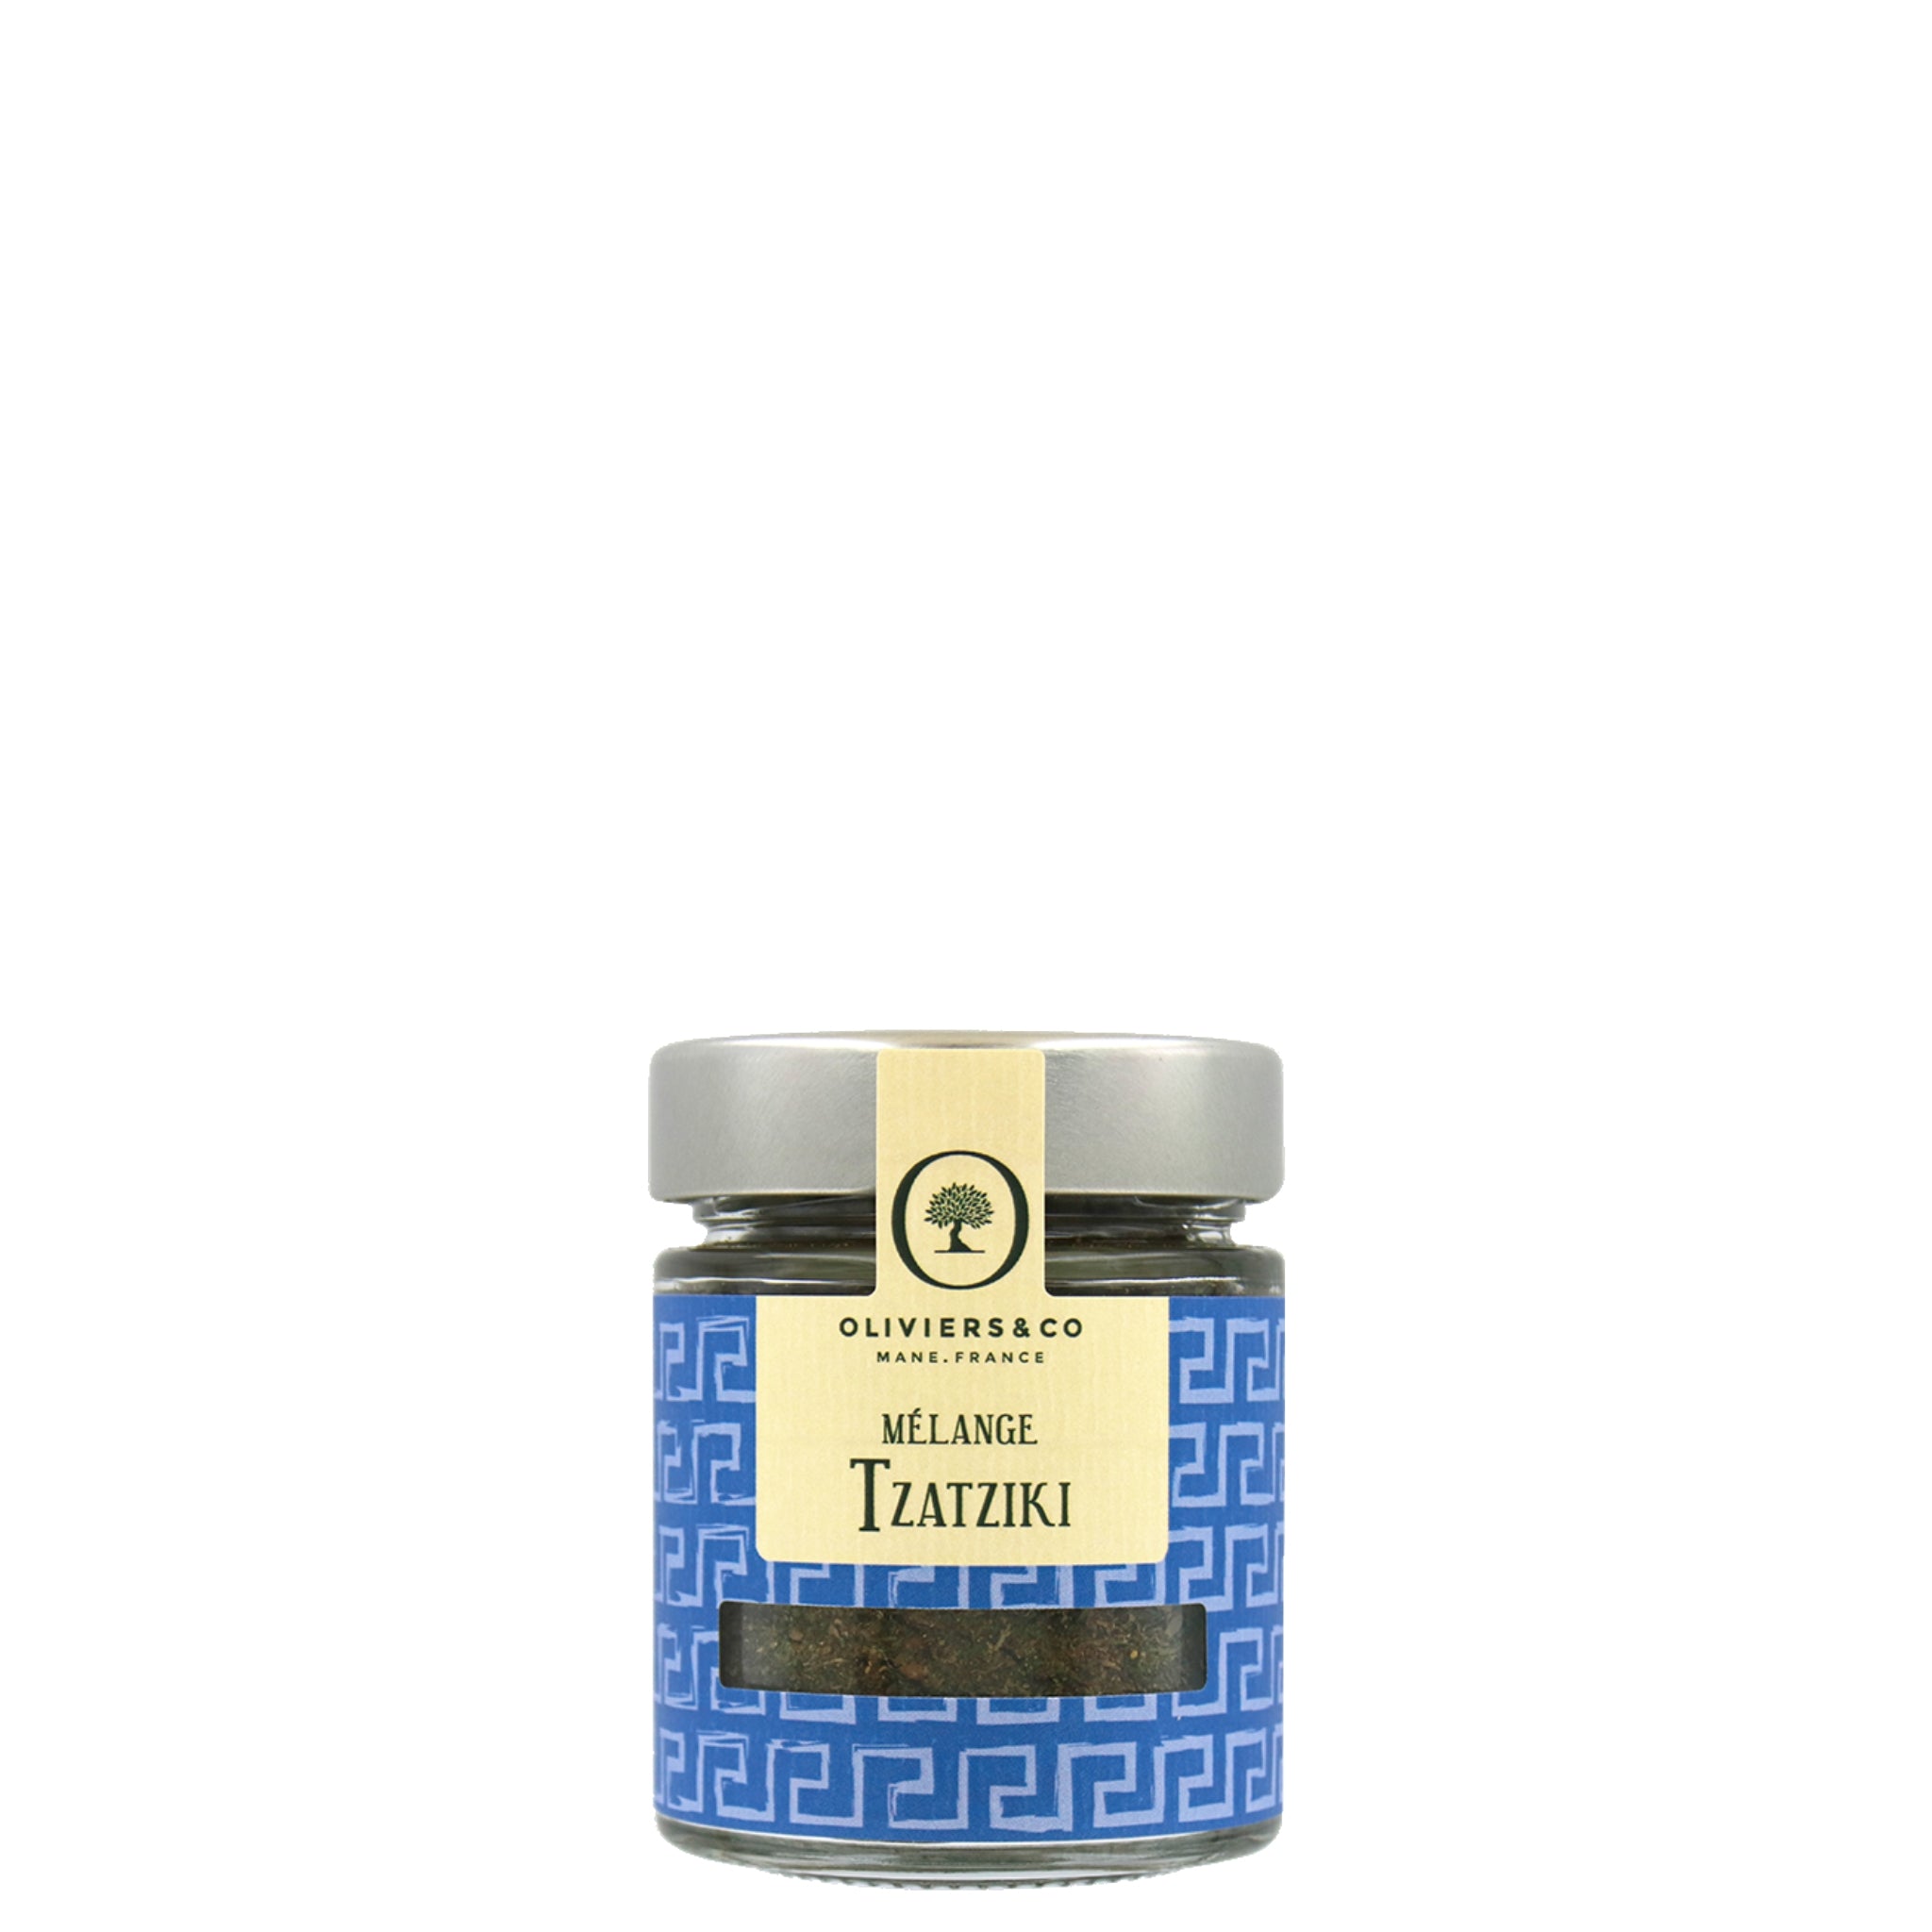 Tzatziki krydderiblanding fra Oliviers & Co